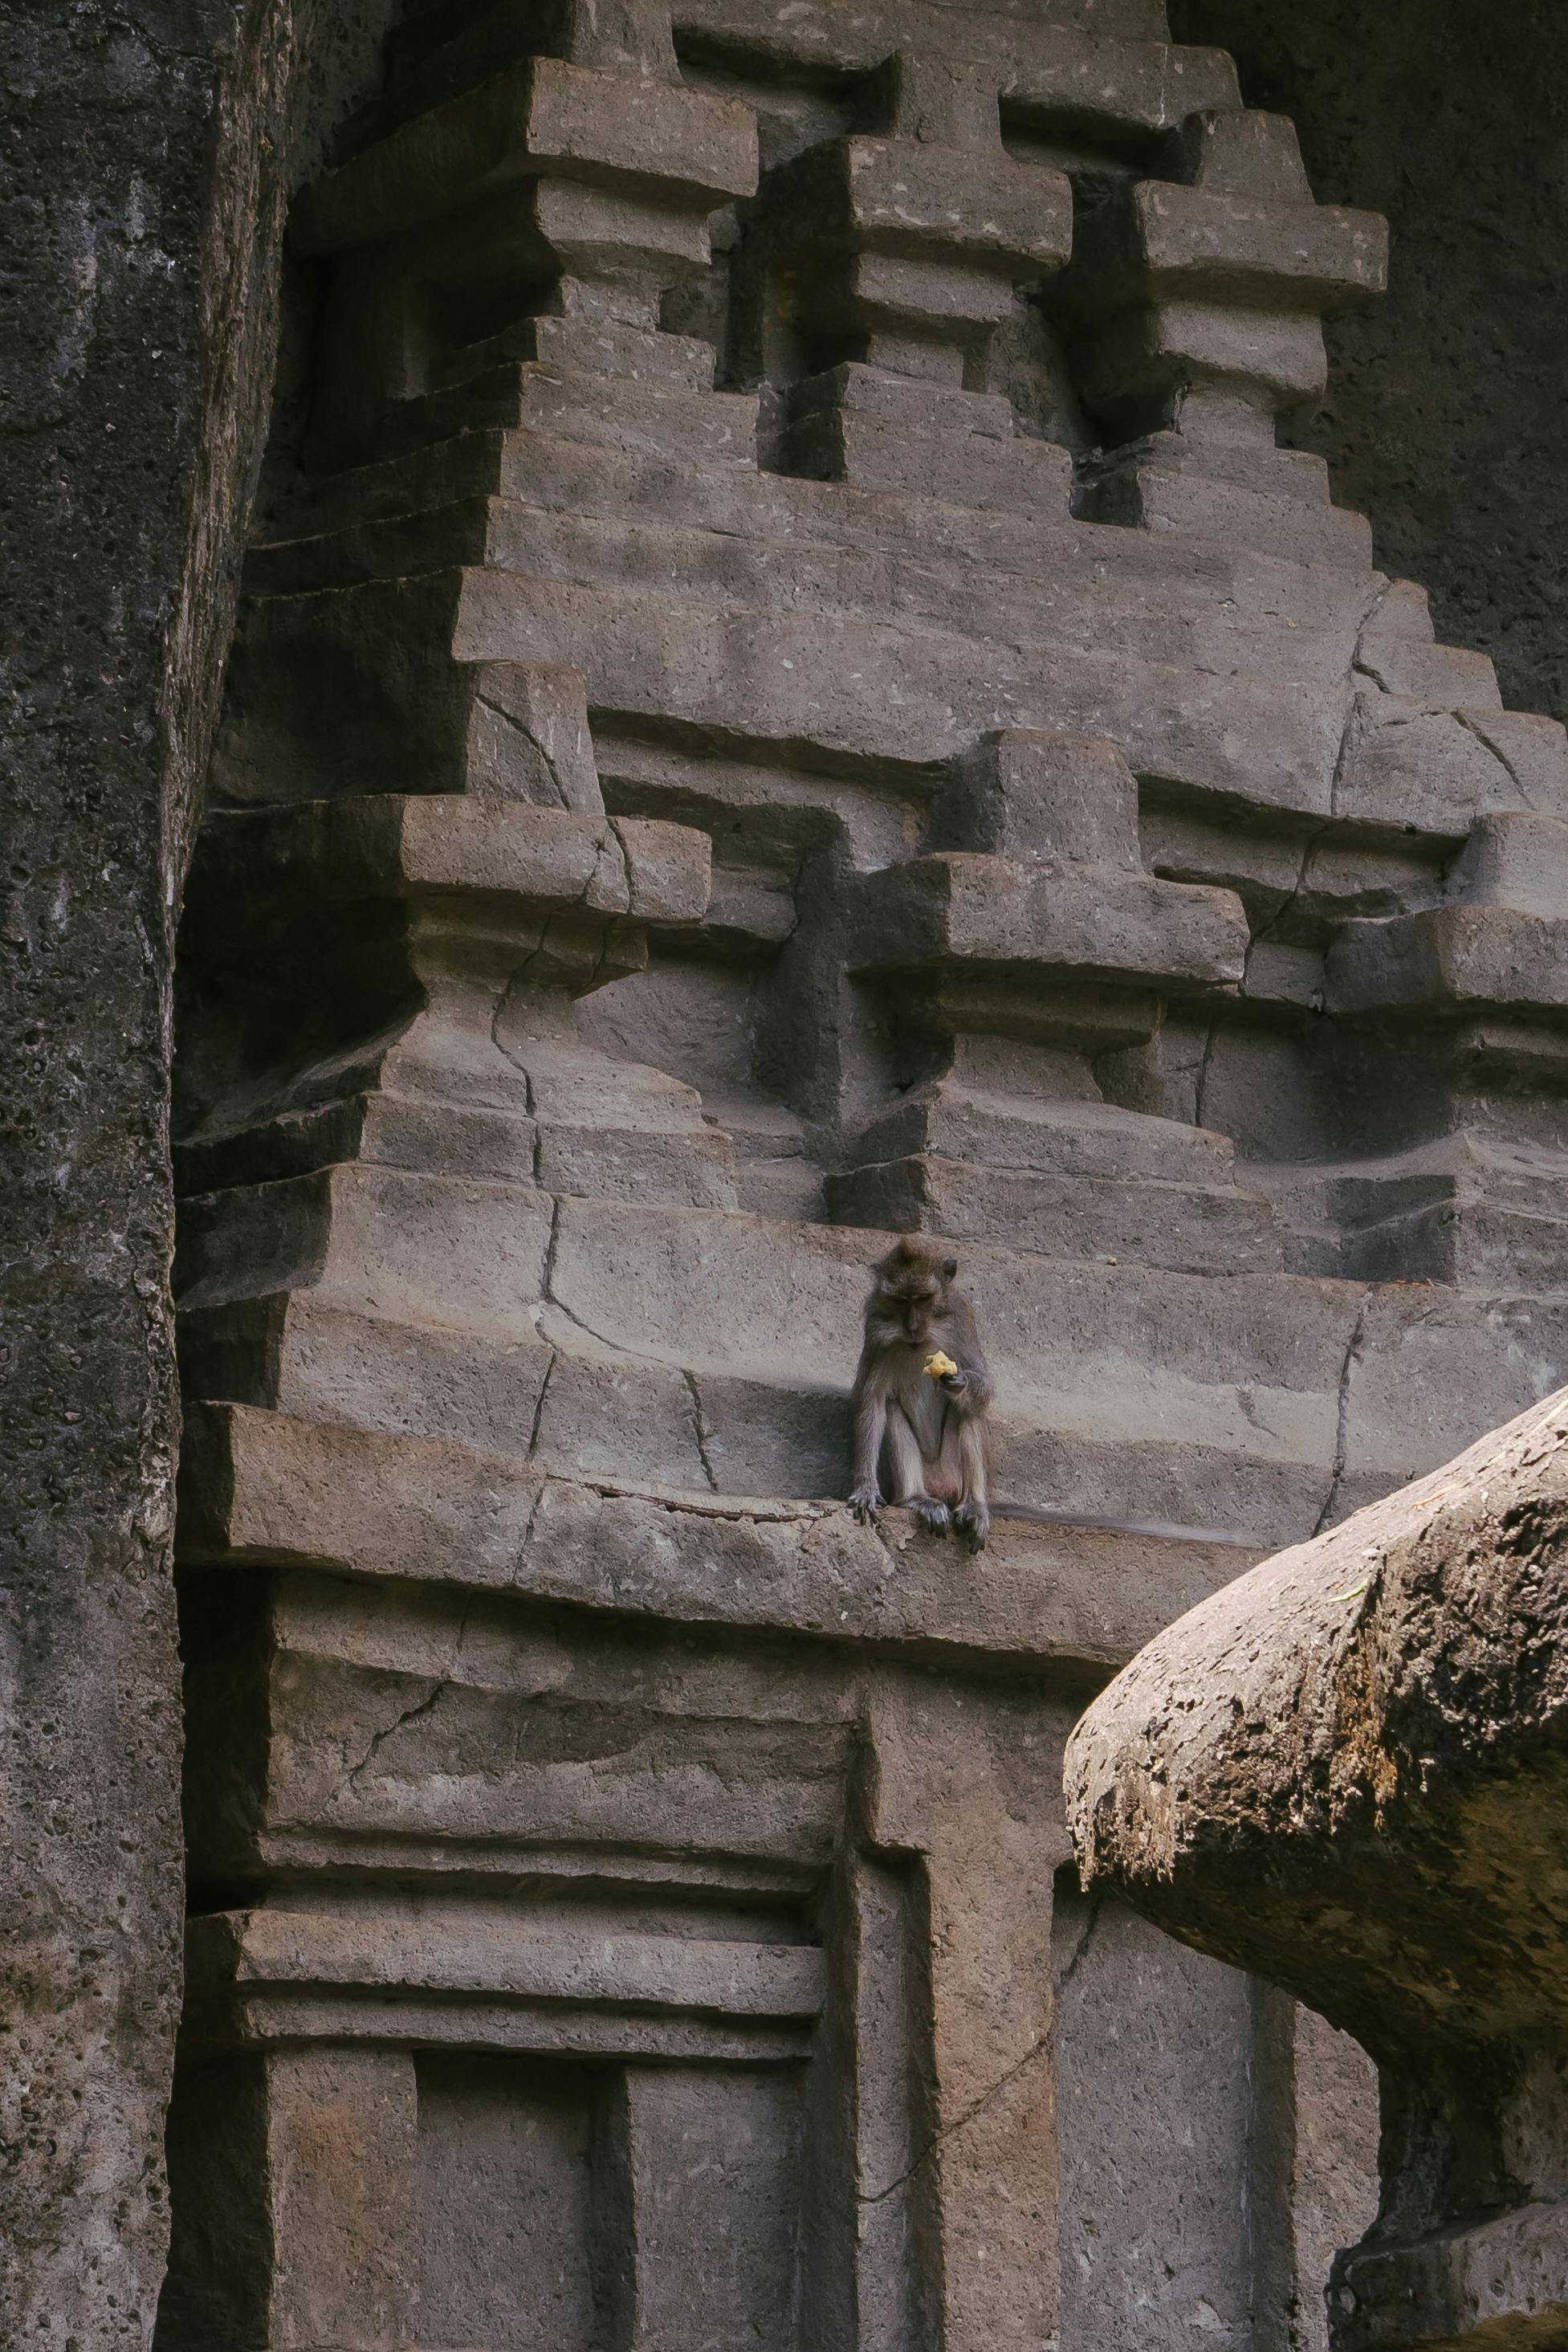 Macaco Chimpanzé No Ramo Do Perfil Foto de Stock - Imagem de endangered,  floresta: 183050238